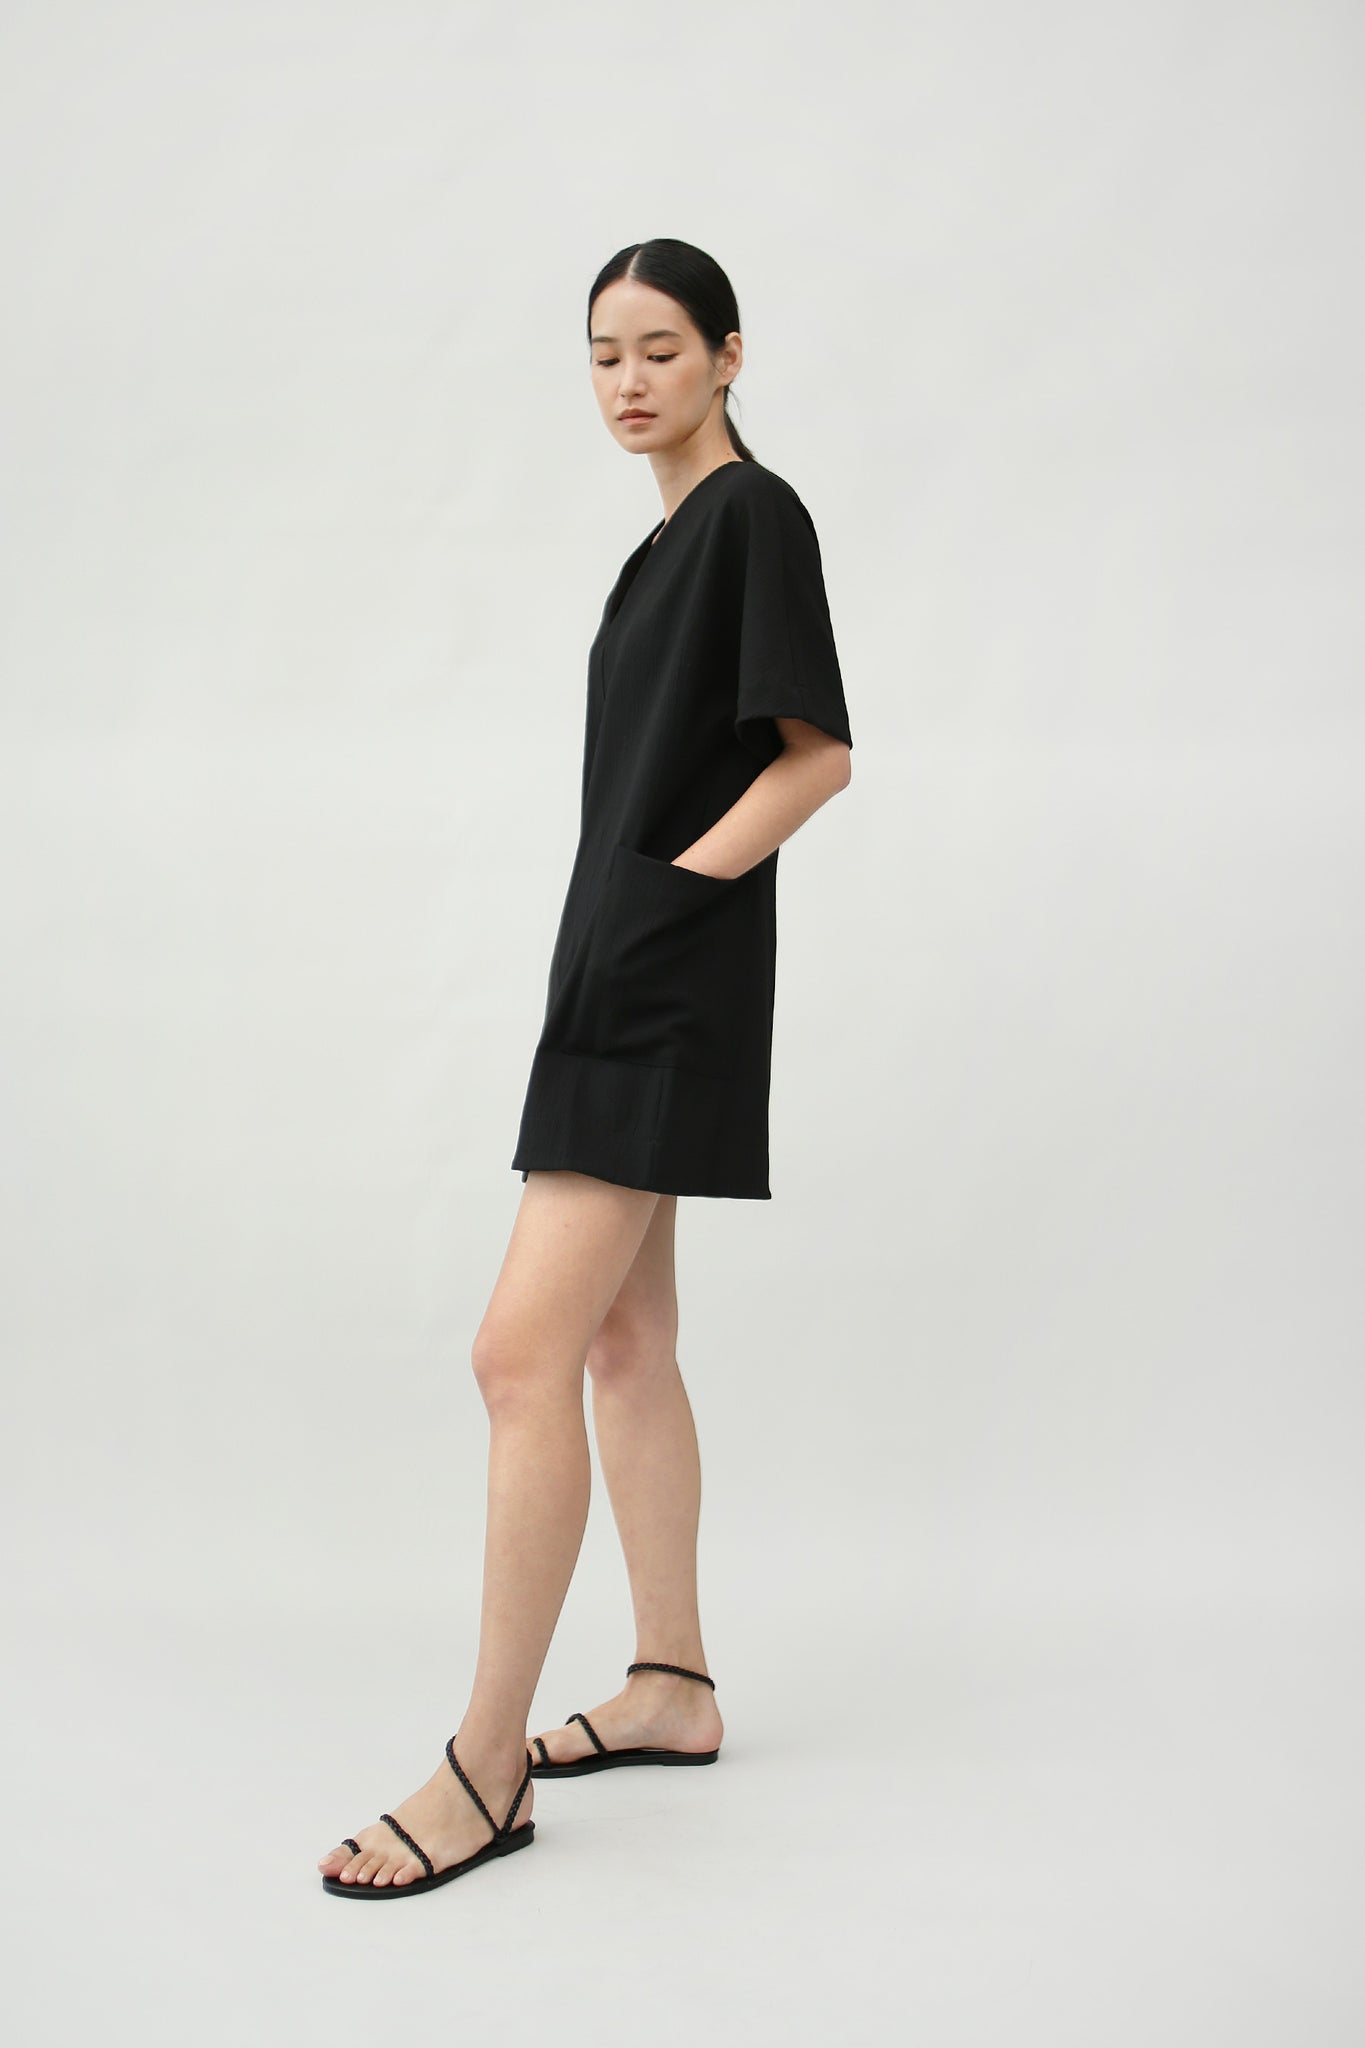 Muni Textured Shift Dress - Black